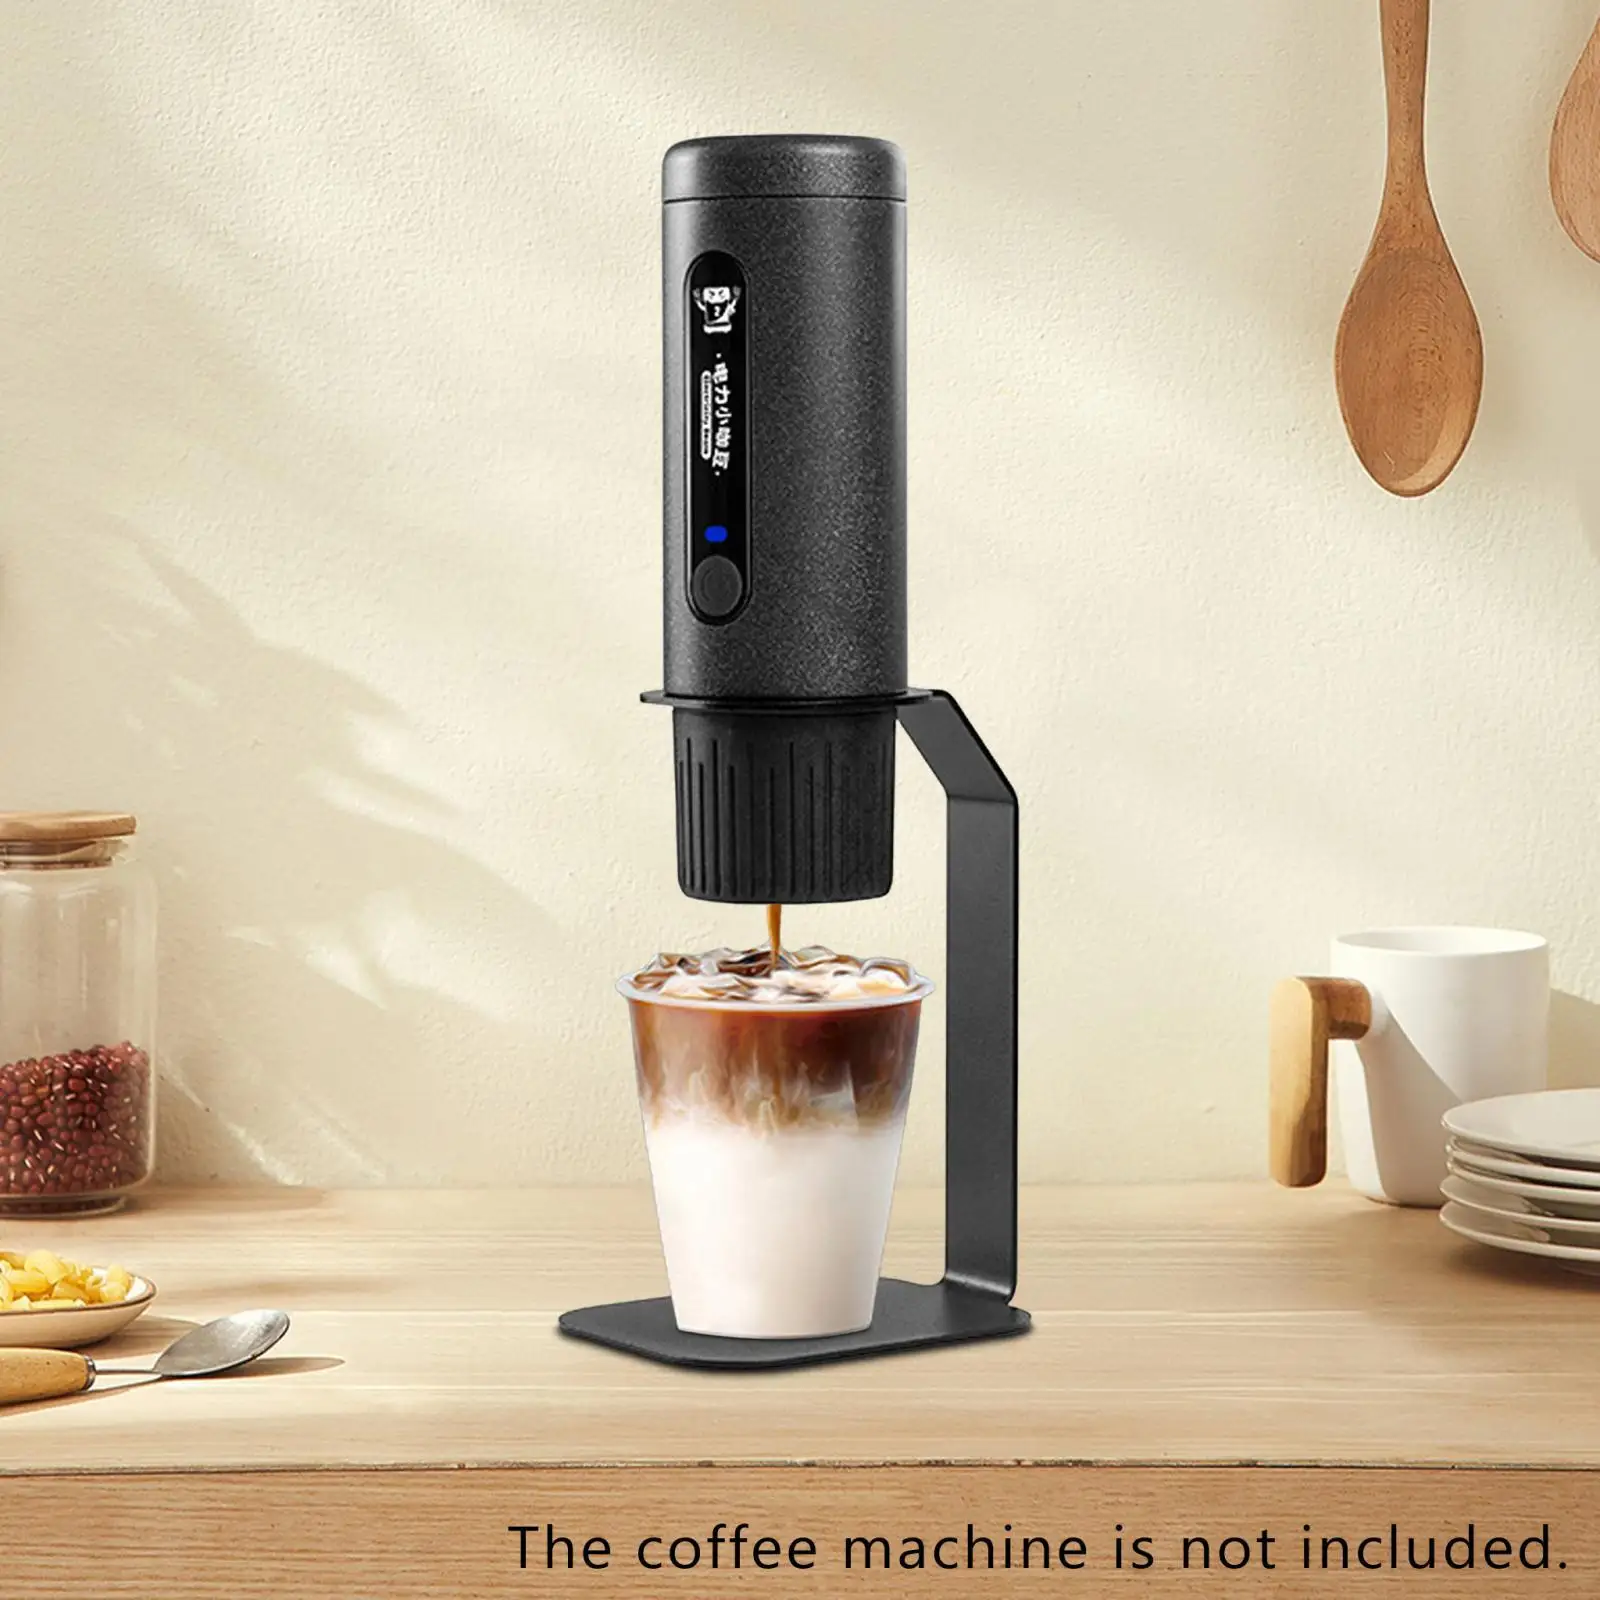 Coffee Dripper Stand, Drip Coffee Filter Holder, Drip Coffee Stand, Pour over Coffee Maker for Cafe